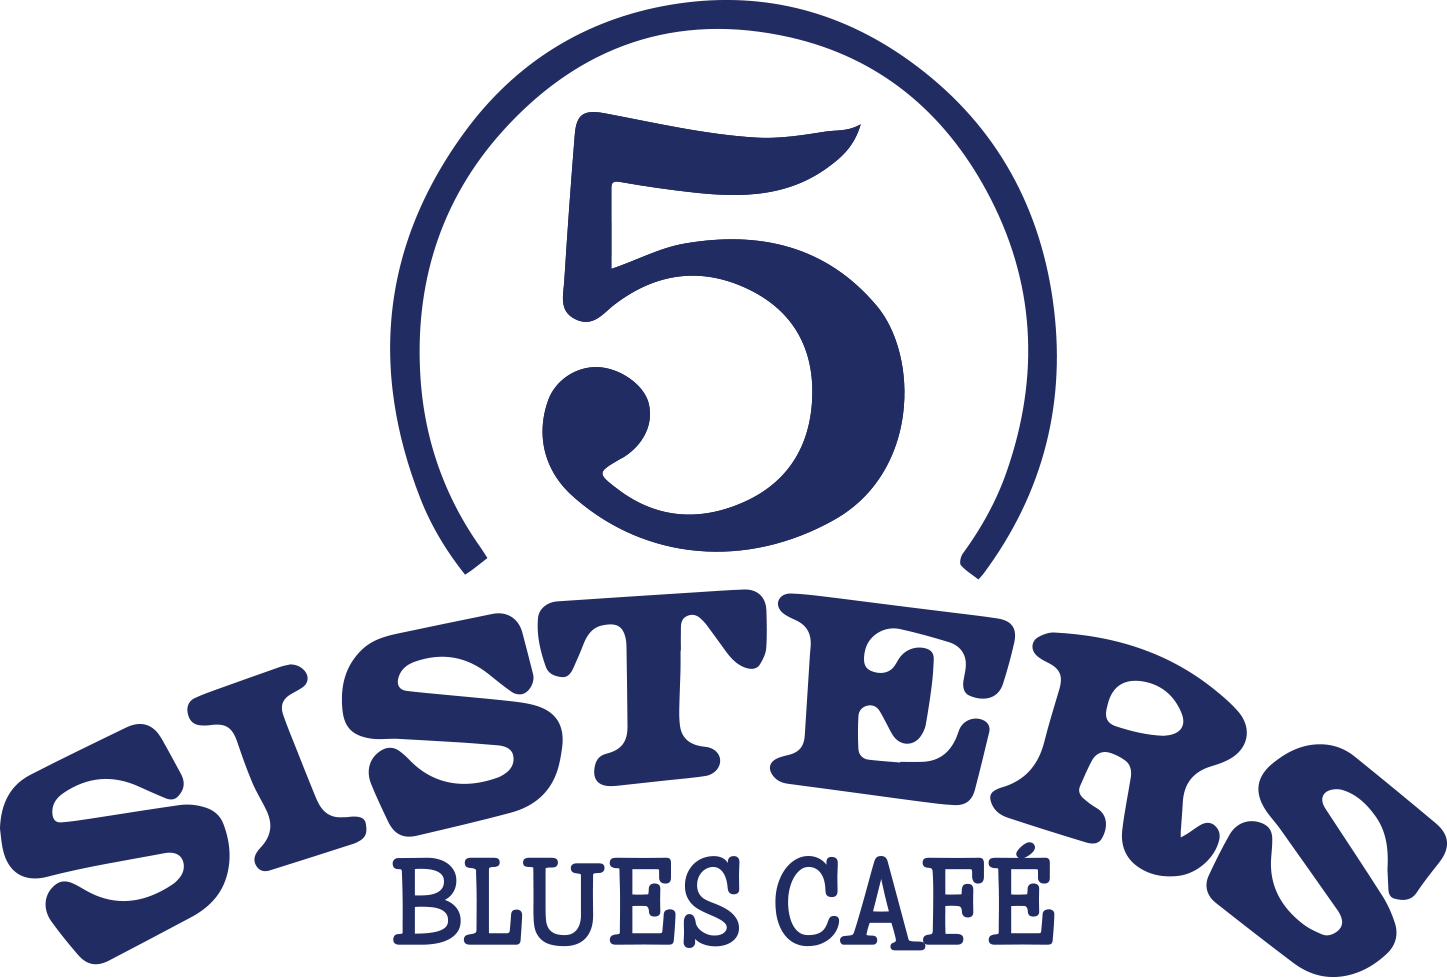 Five Sisters Blues Cafe logo